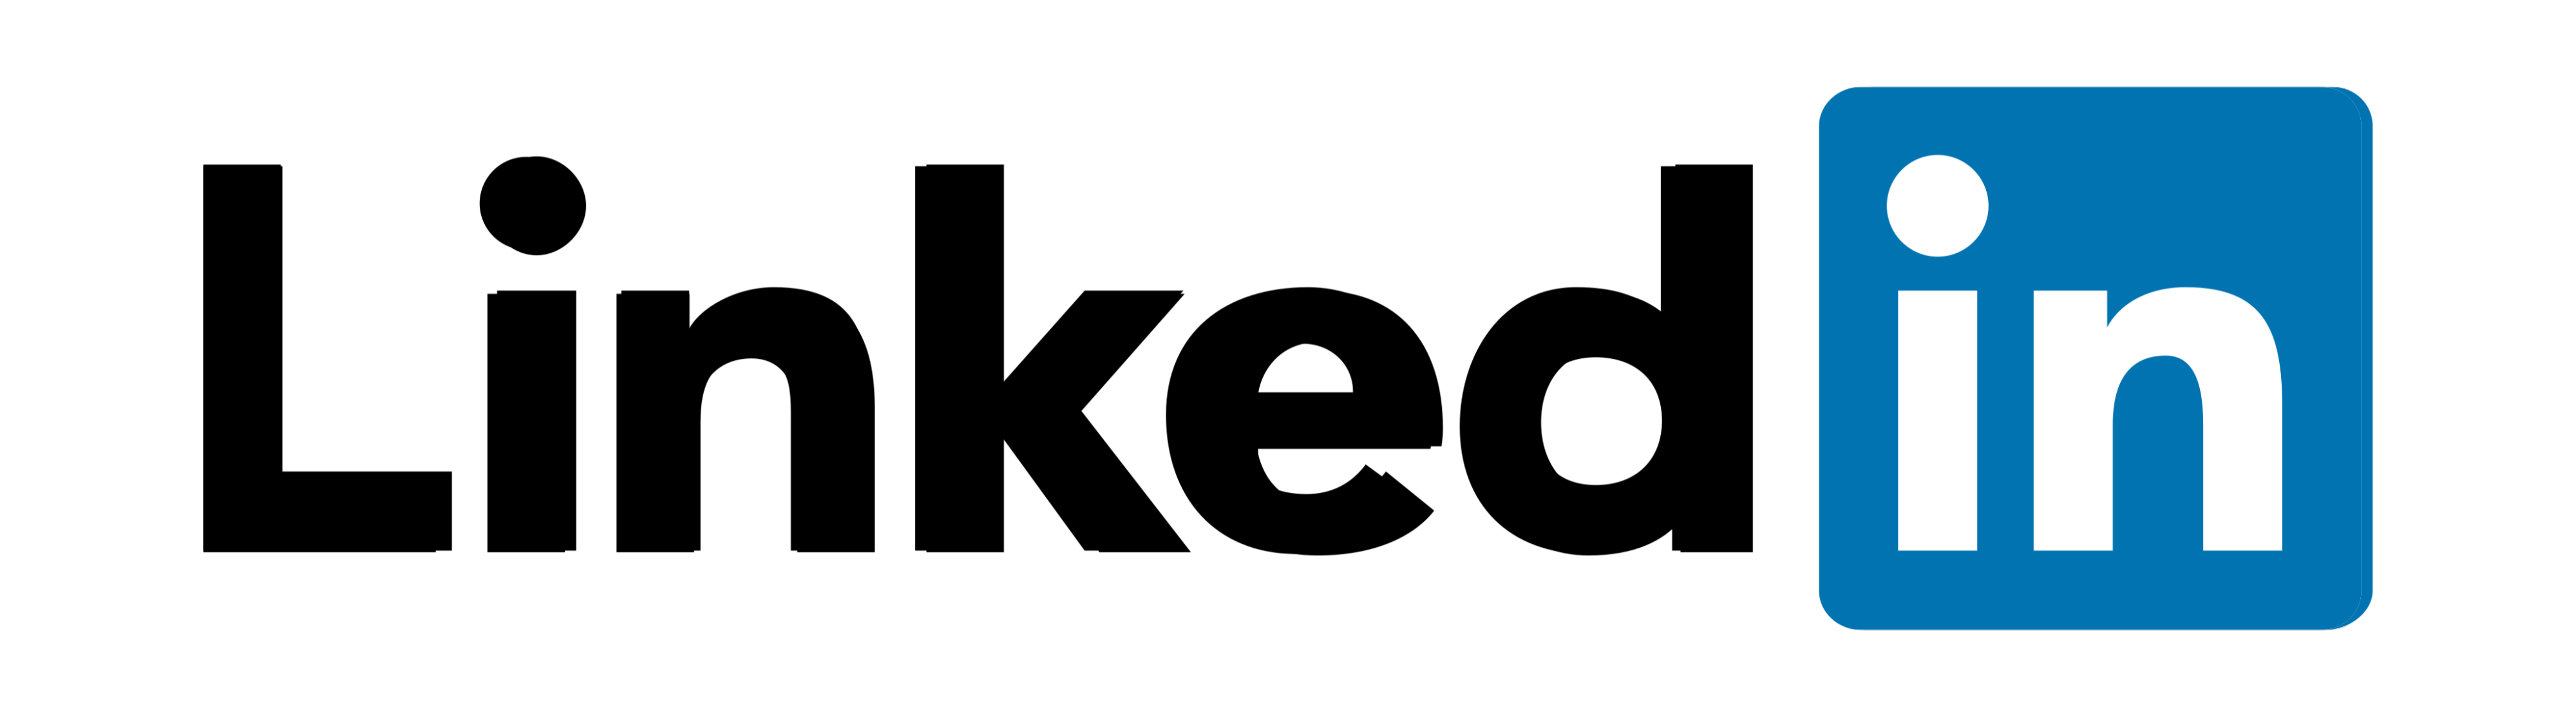 linkedIn logo 0 1